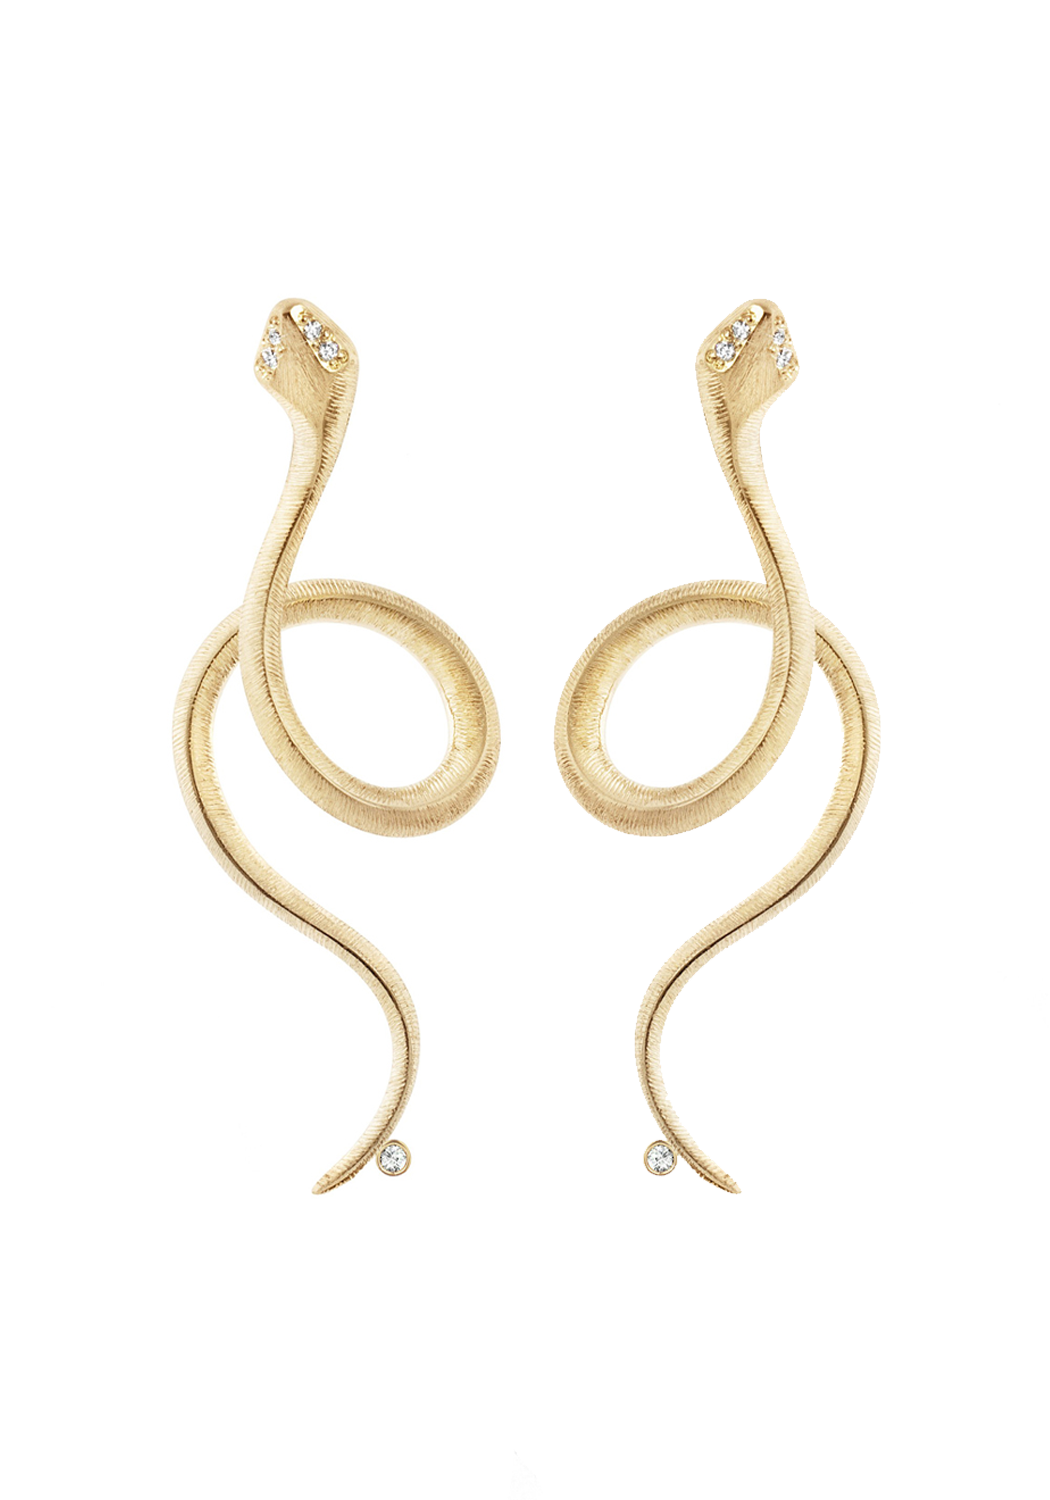 Ole Lynggaard 18KYG Diamond Snake Earrings | Sold Individually | OsterJewelers.com